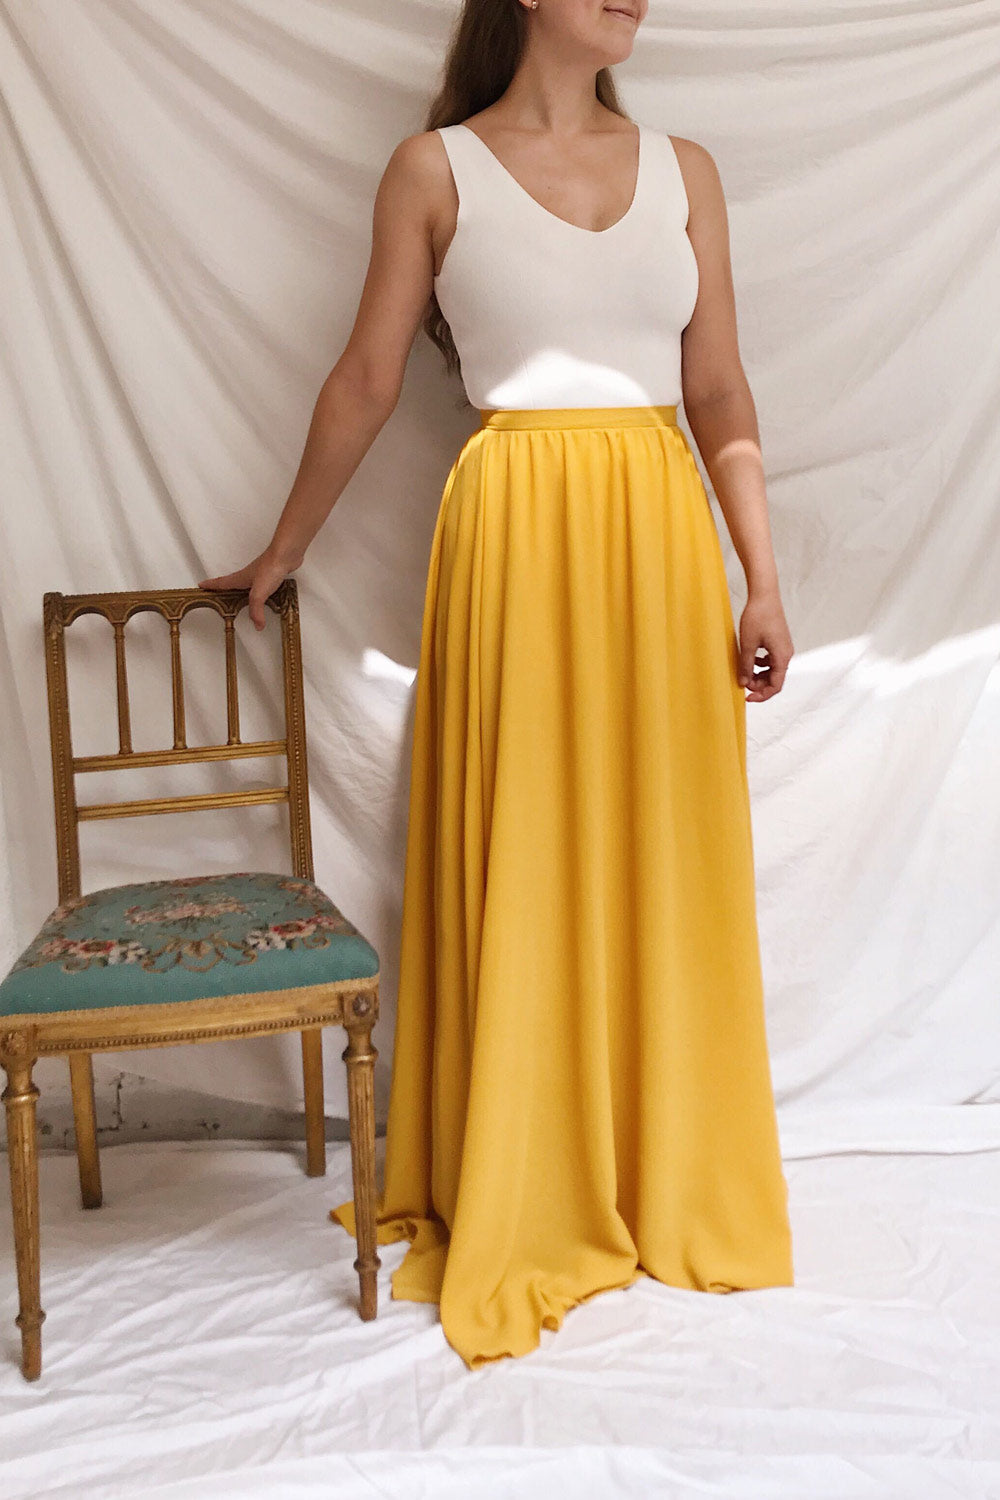 Glykeria Sun Golden Yellow Chiffon Maxi Skirt | Boutique 1861 model look